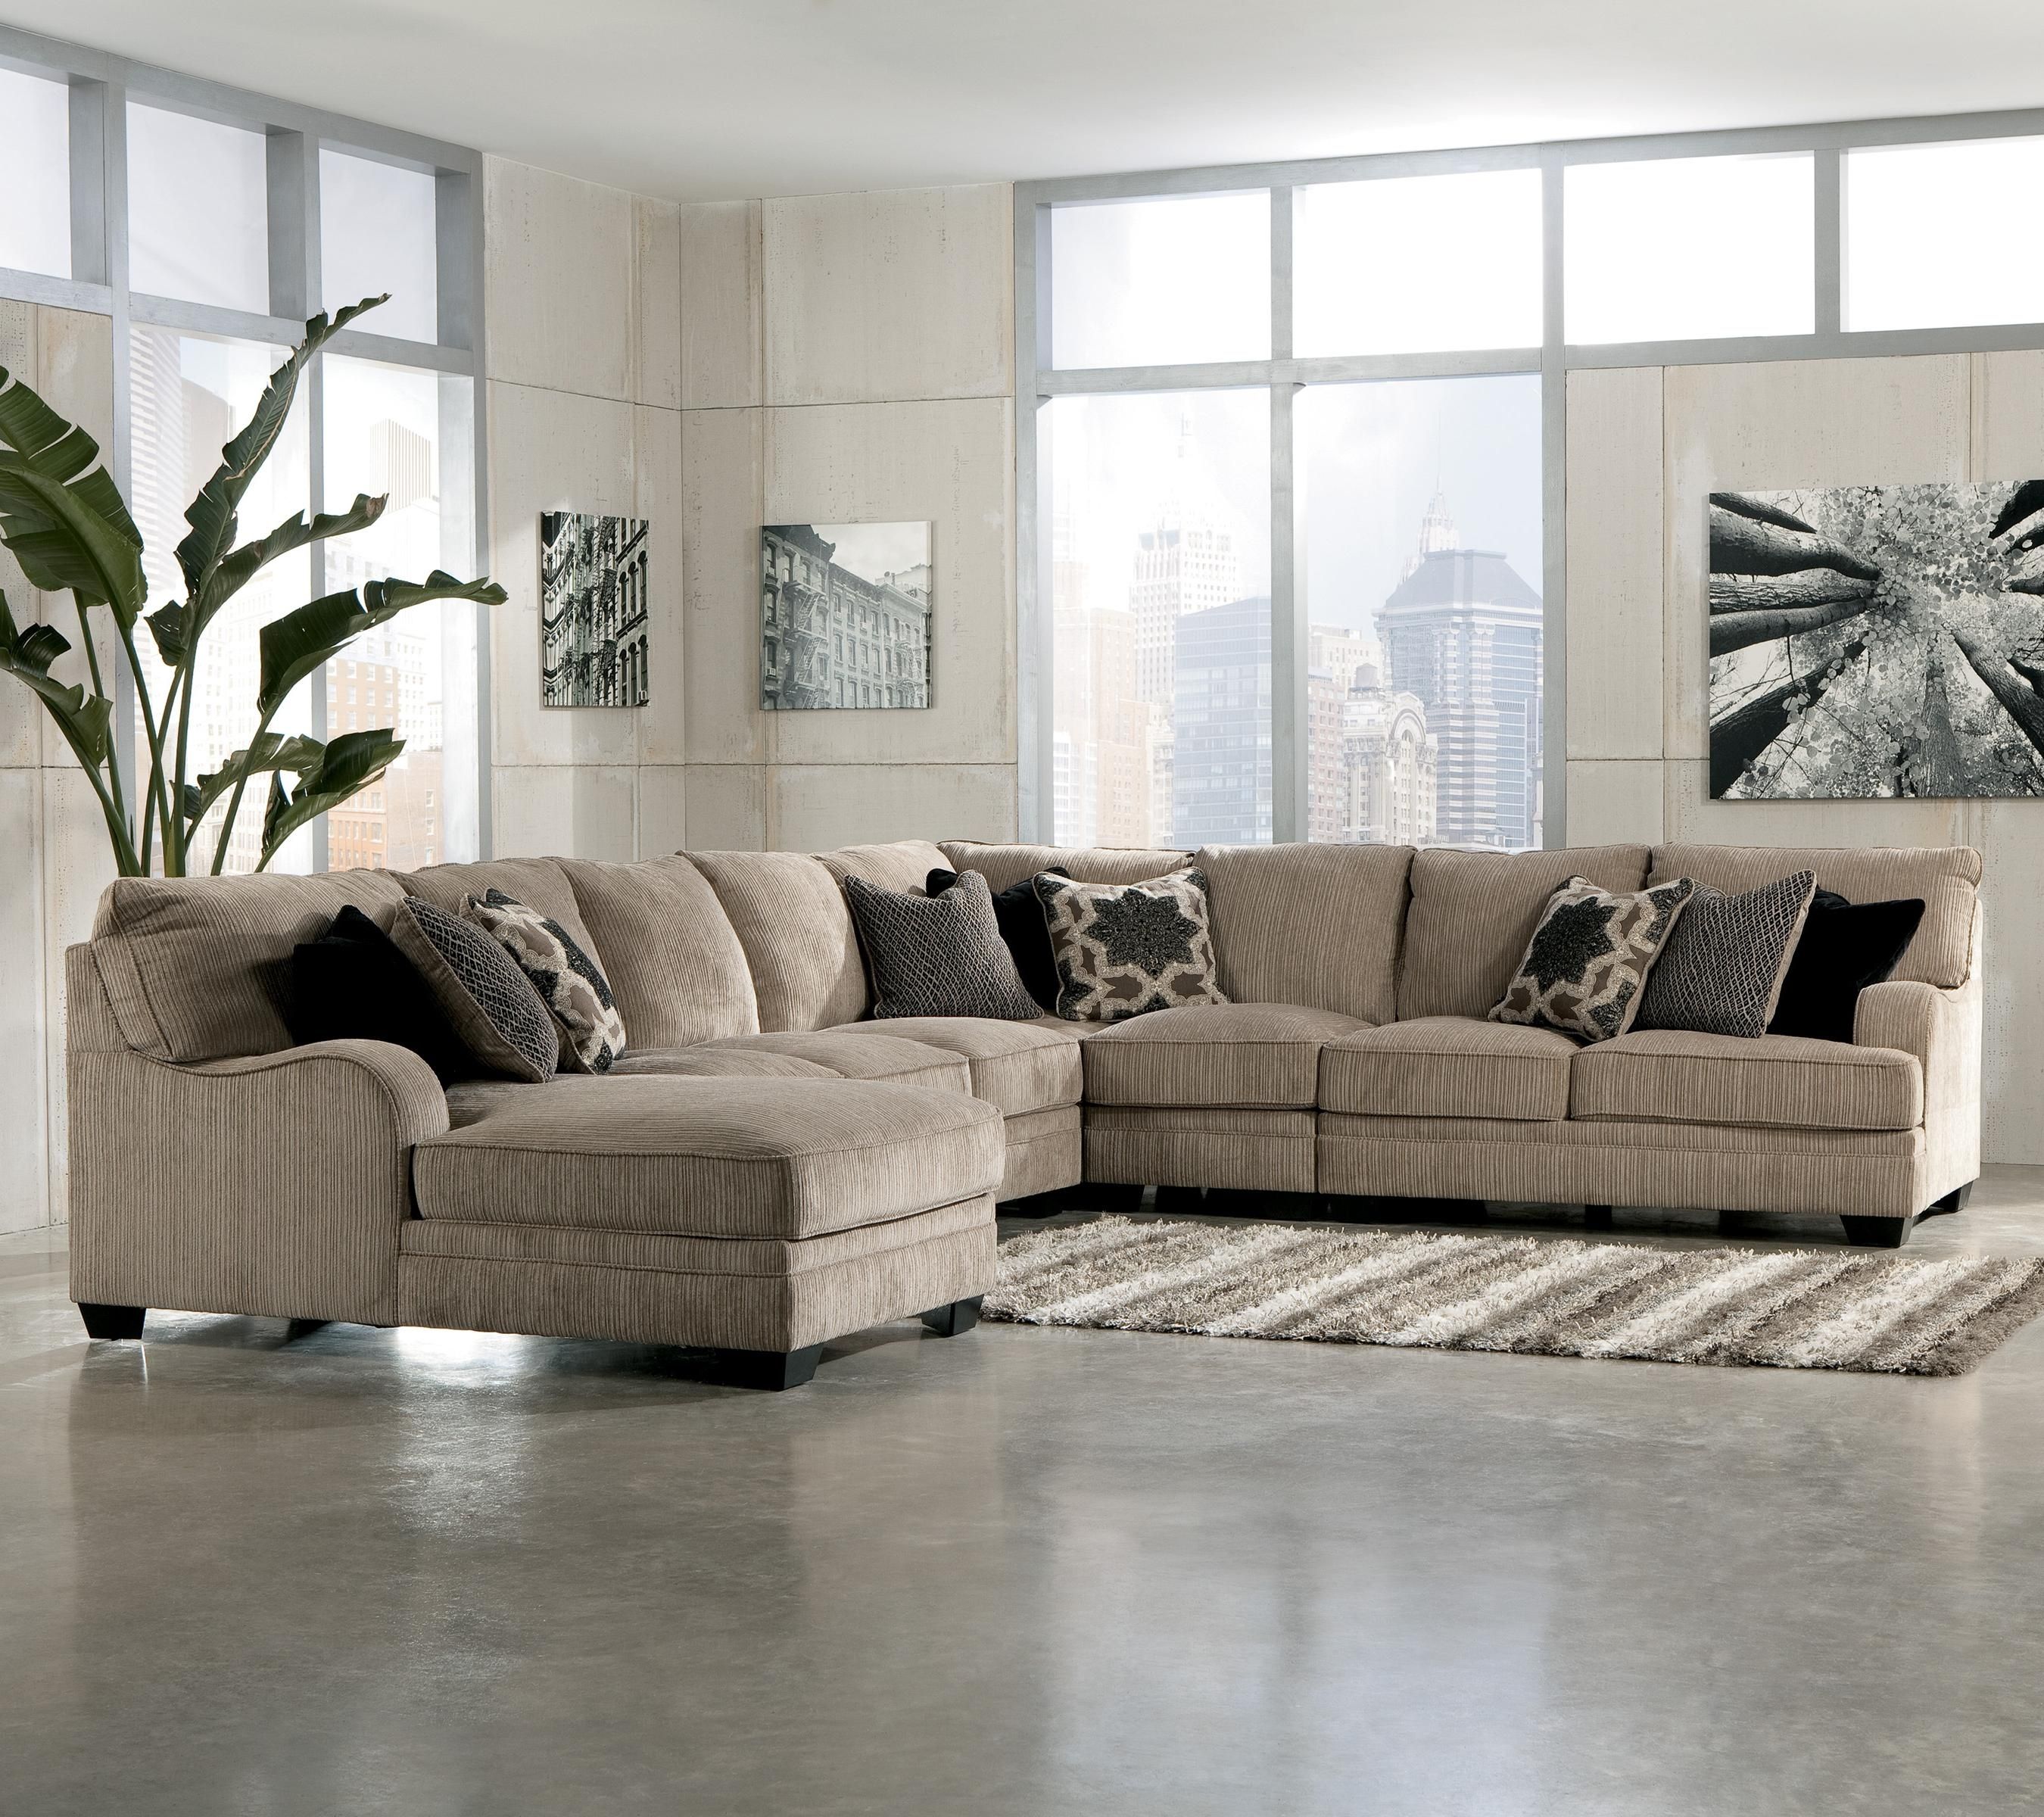 Signature Designashley Katisha – Platinum 5 Piece Sectional Sofa For Rochester Ny Sectional Sofas (View 1 of 10)